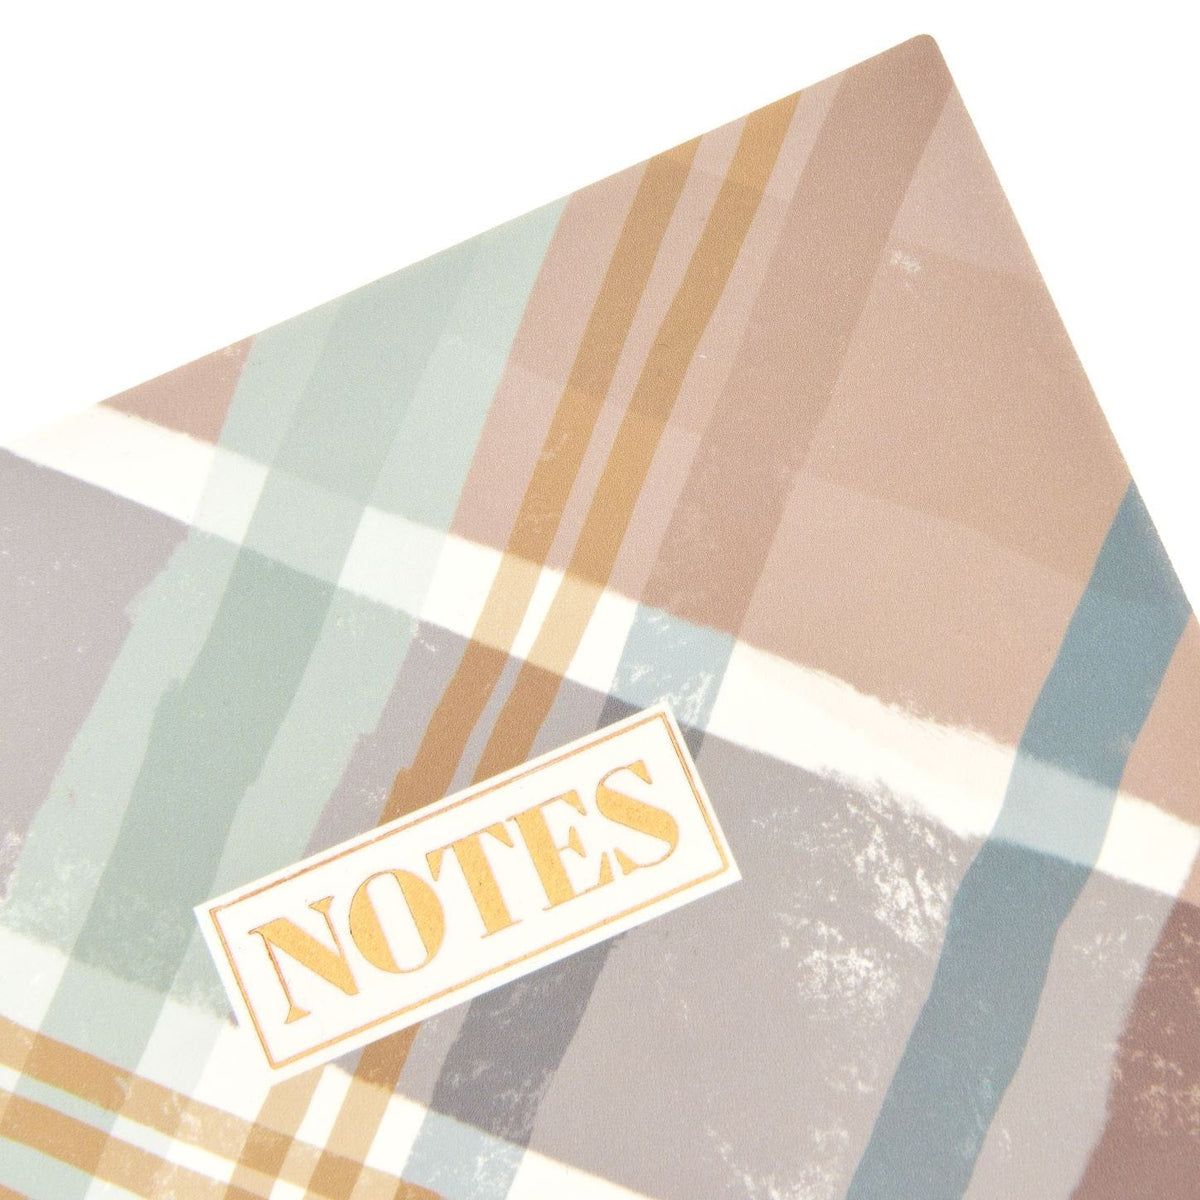 Tan Plaid Notebook Gartner Studios Notebooks 96207